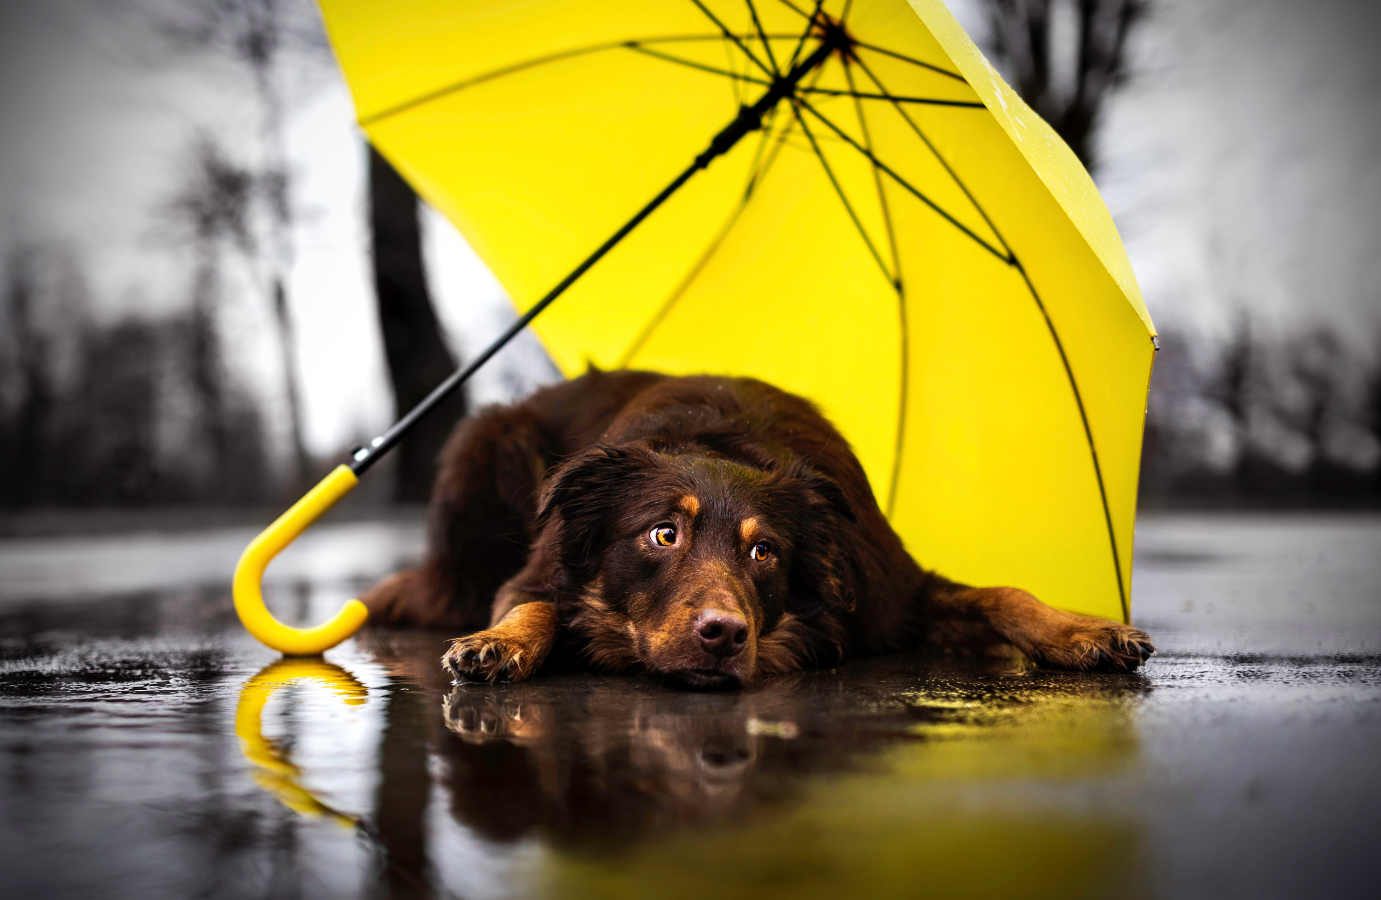 A brown Australian Shepherd sitting in the rain under a yellow umbrella.